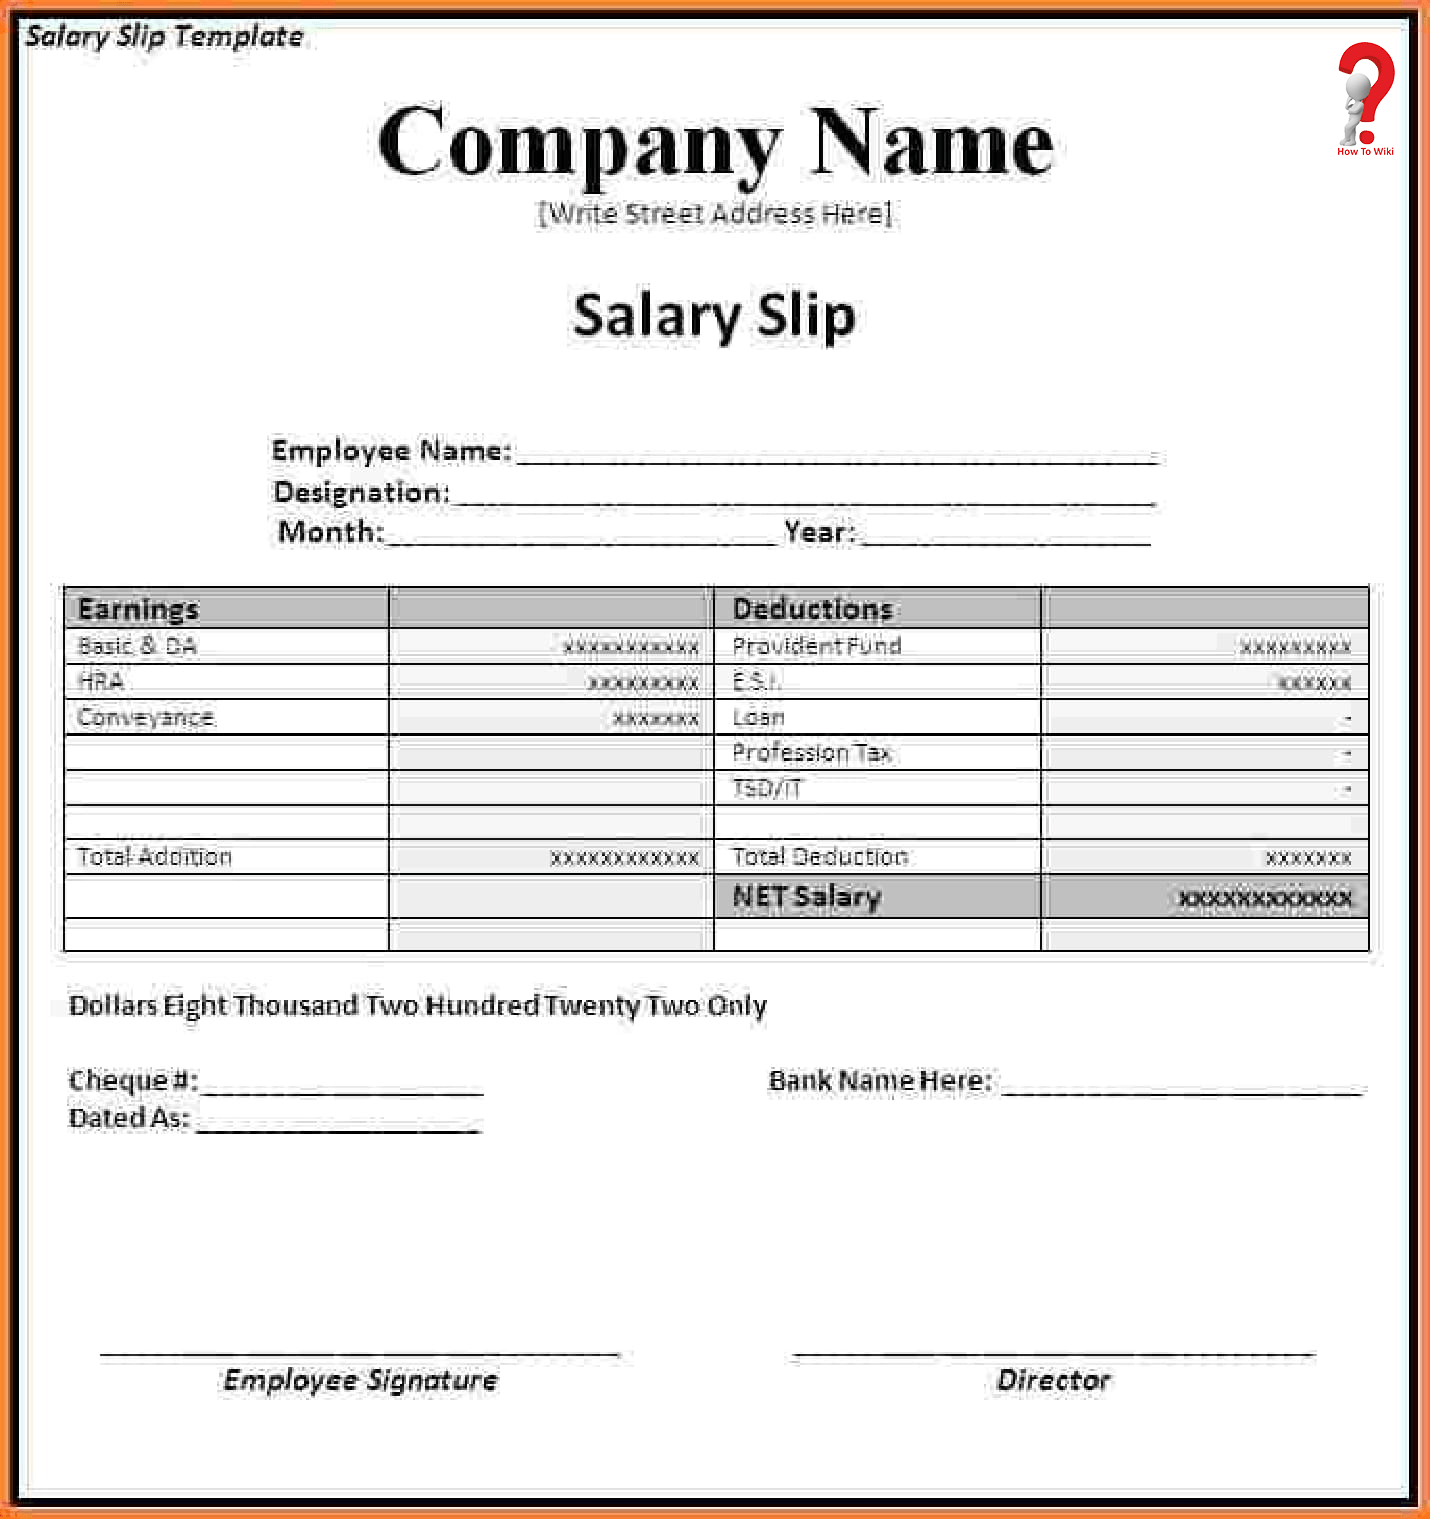 Salary Slip Format Pdf - simmopla